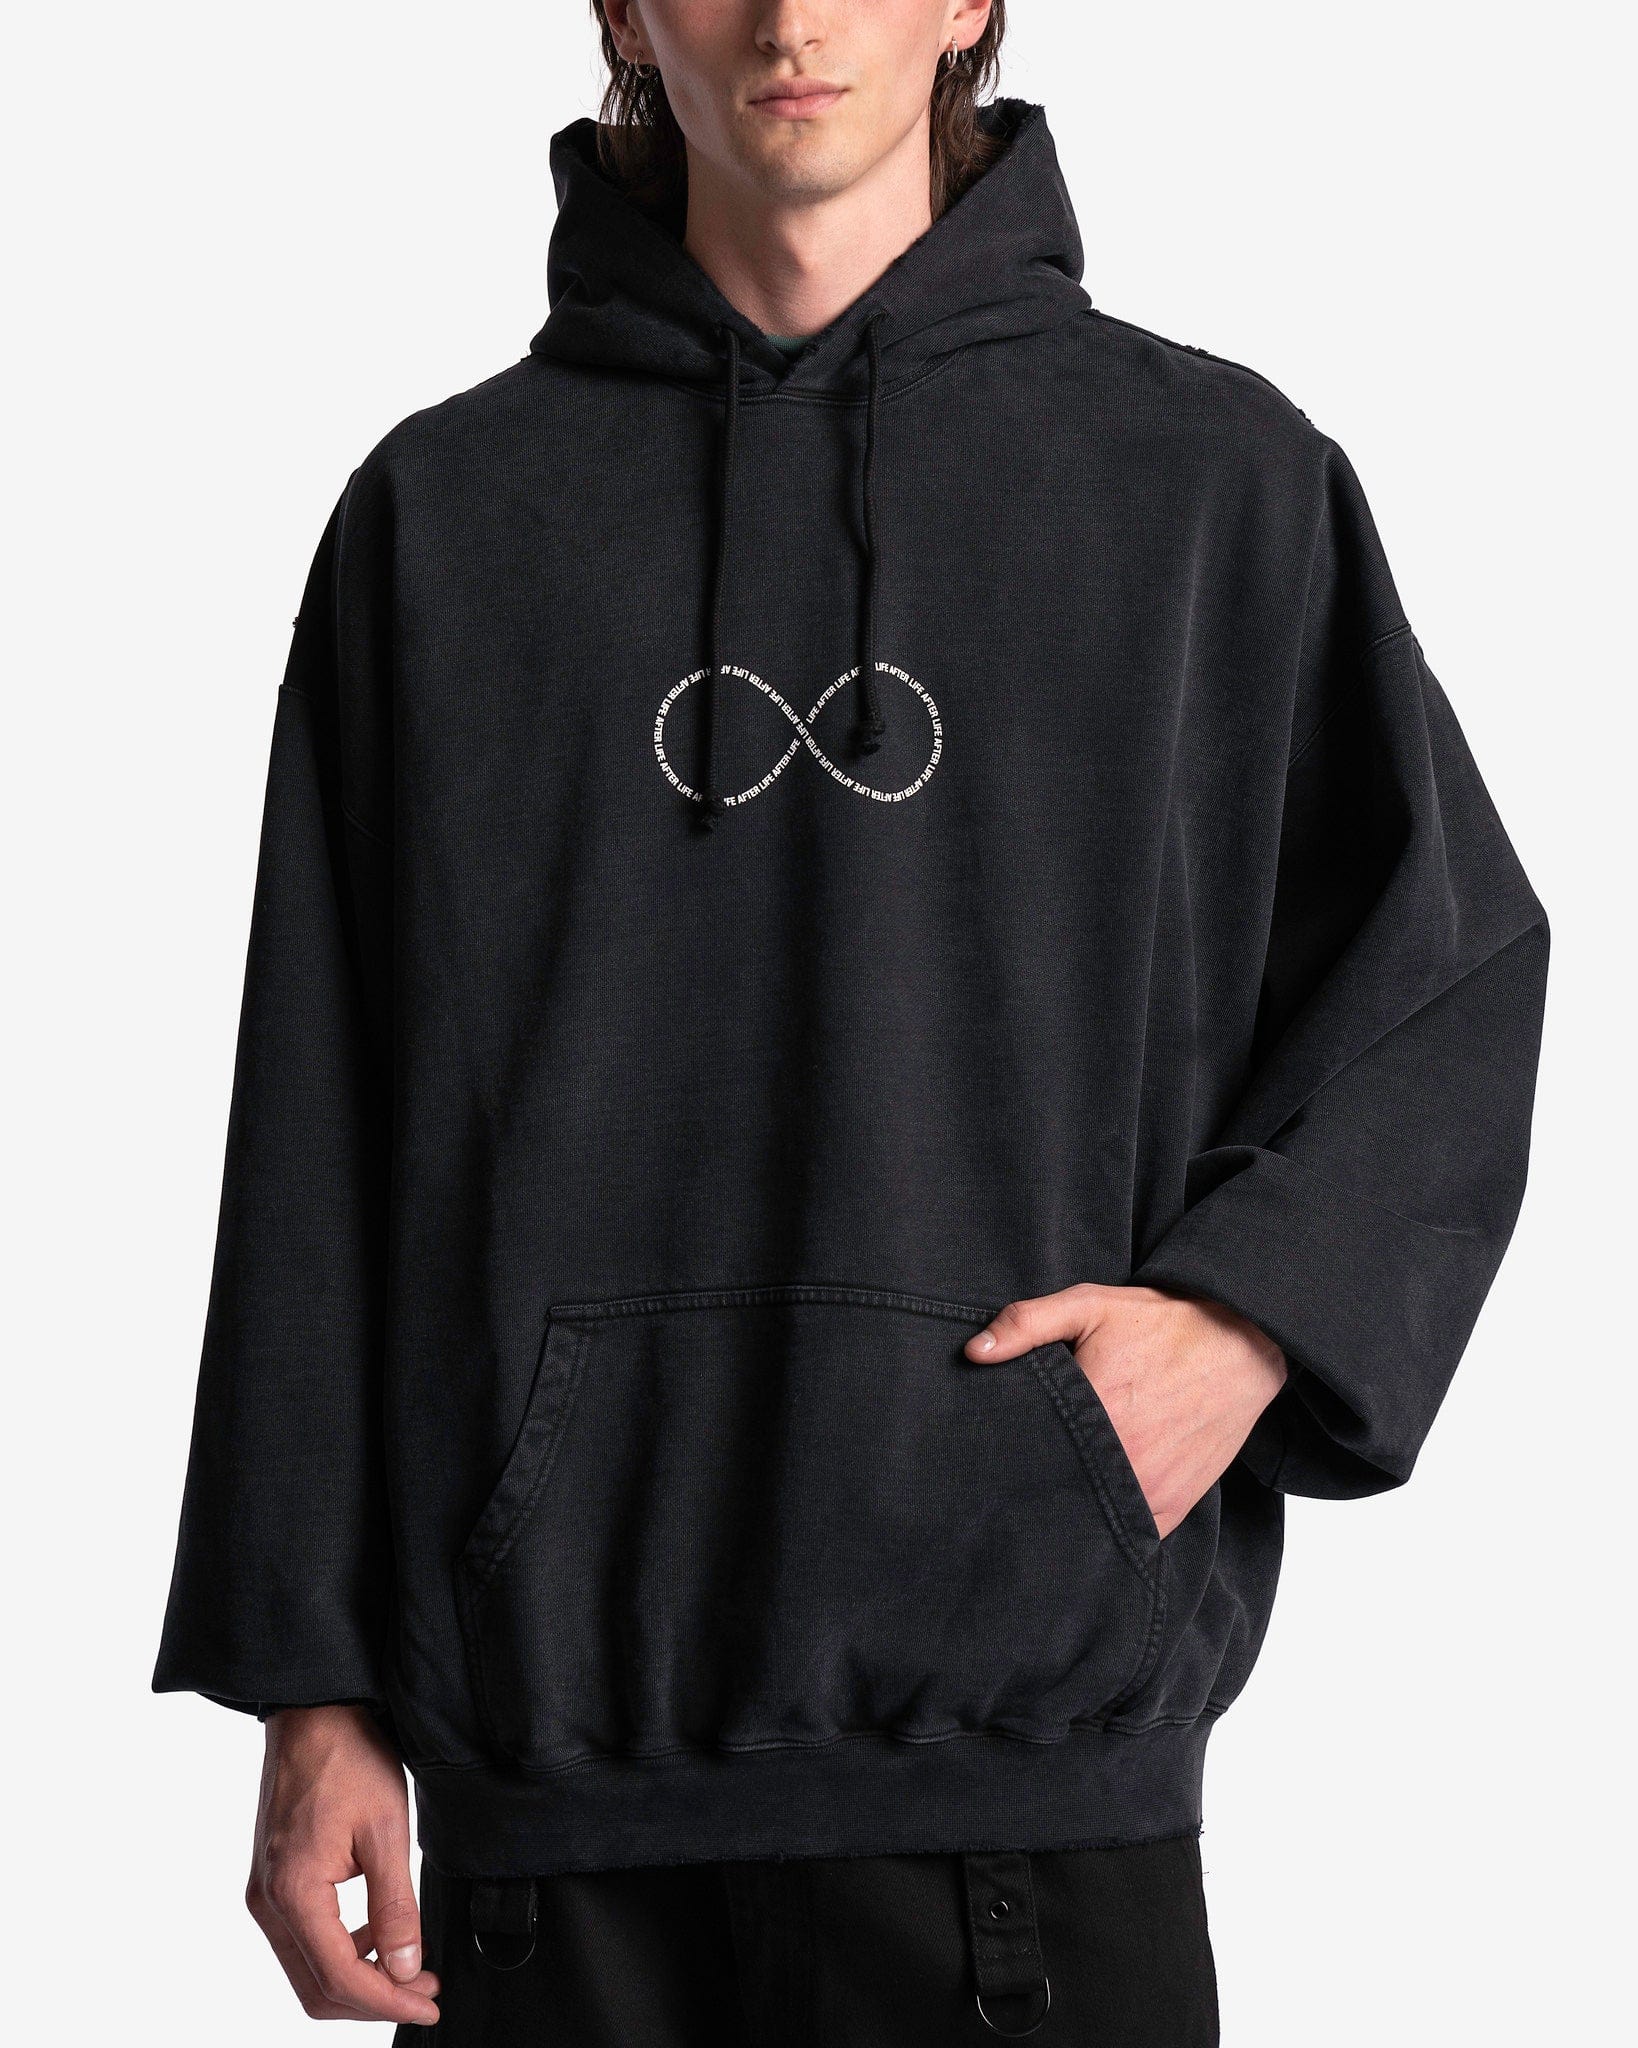 VETEMENTS Men's Sweatshirts Life After Life Infinity Hoodie in Faded Black